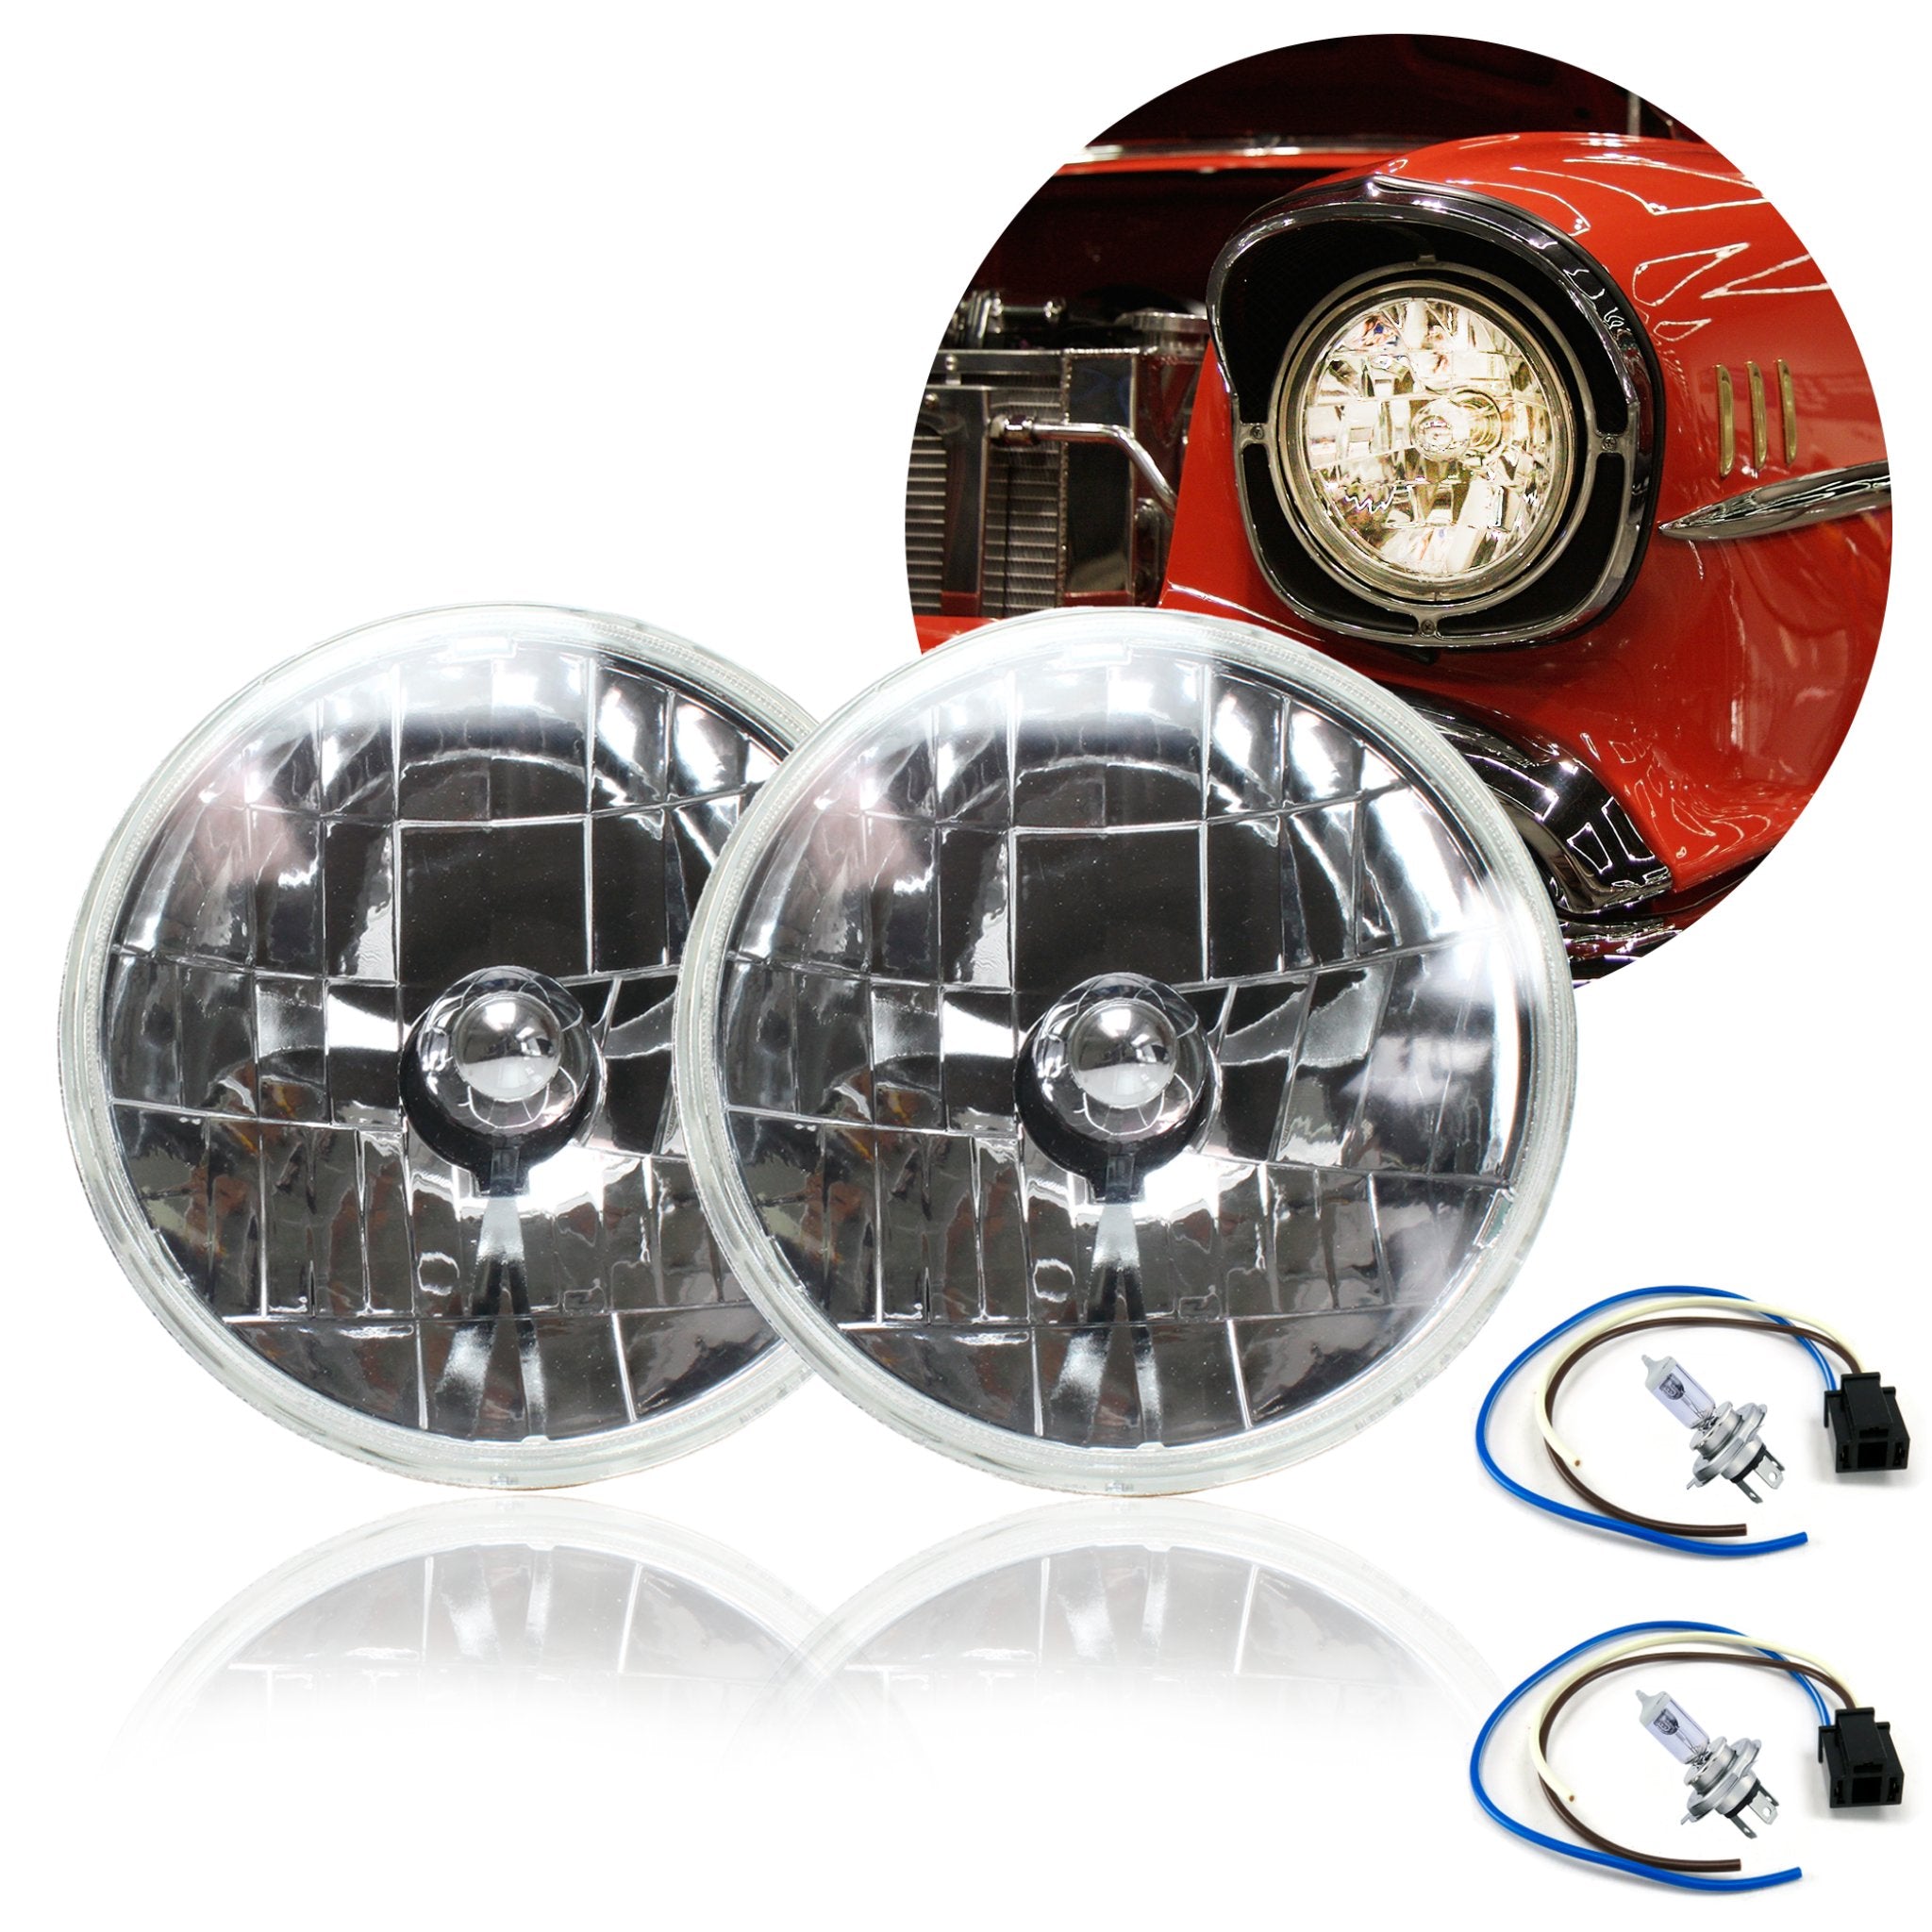 Snake Eye 7" Round Halogen Headlight Assembly Pair Glass Lens Car Truck Hot Rod